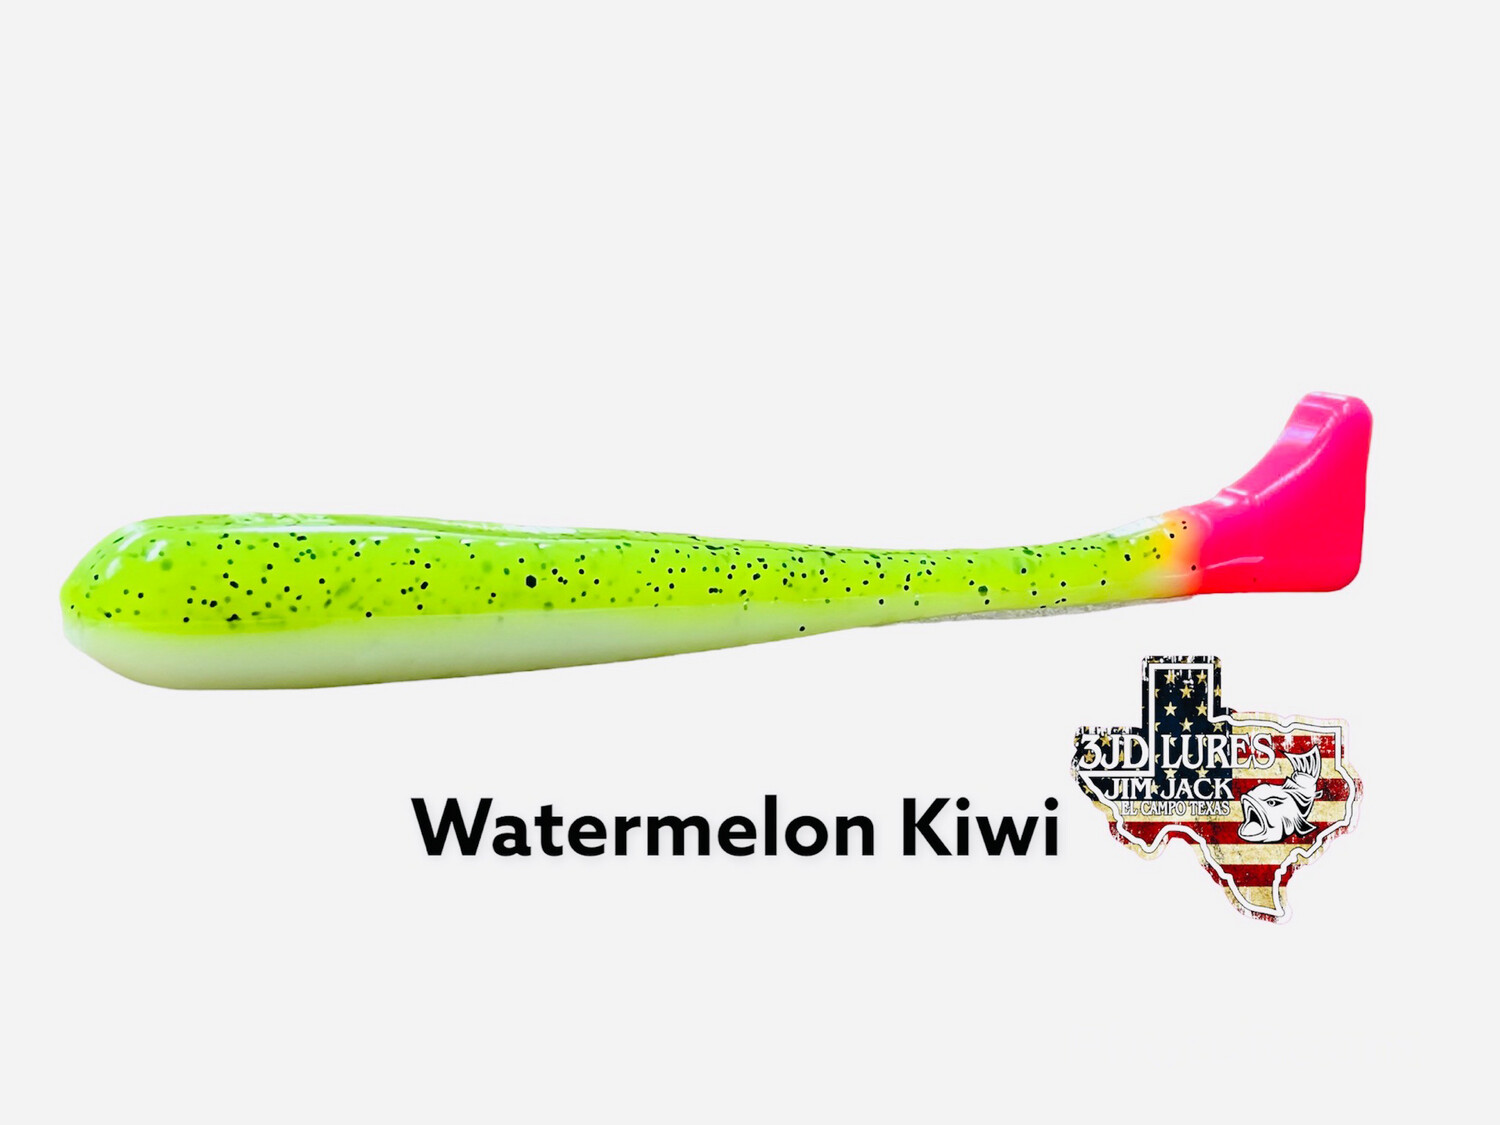 Watermelon Kiwi